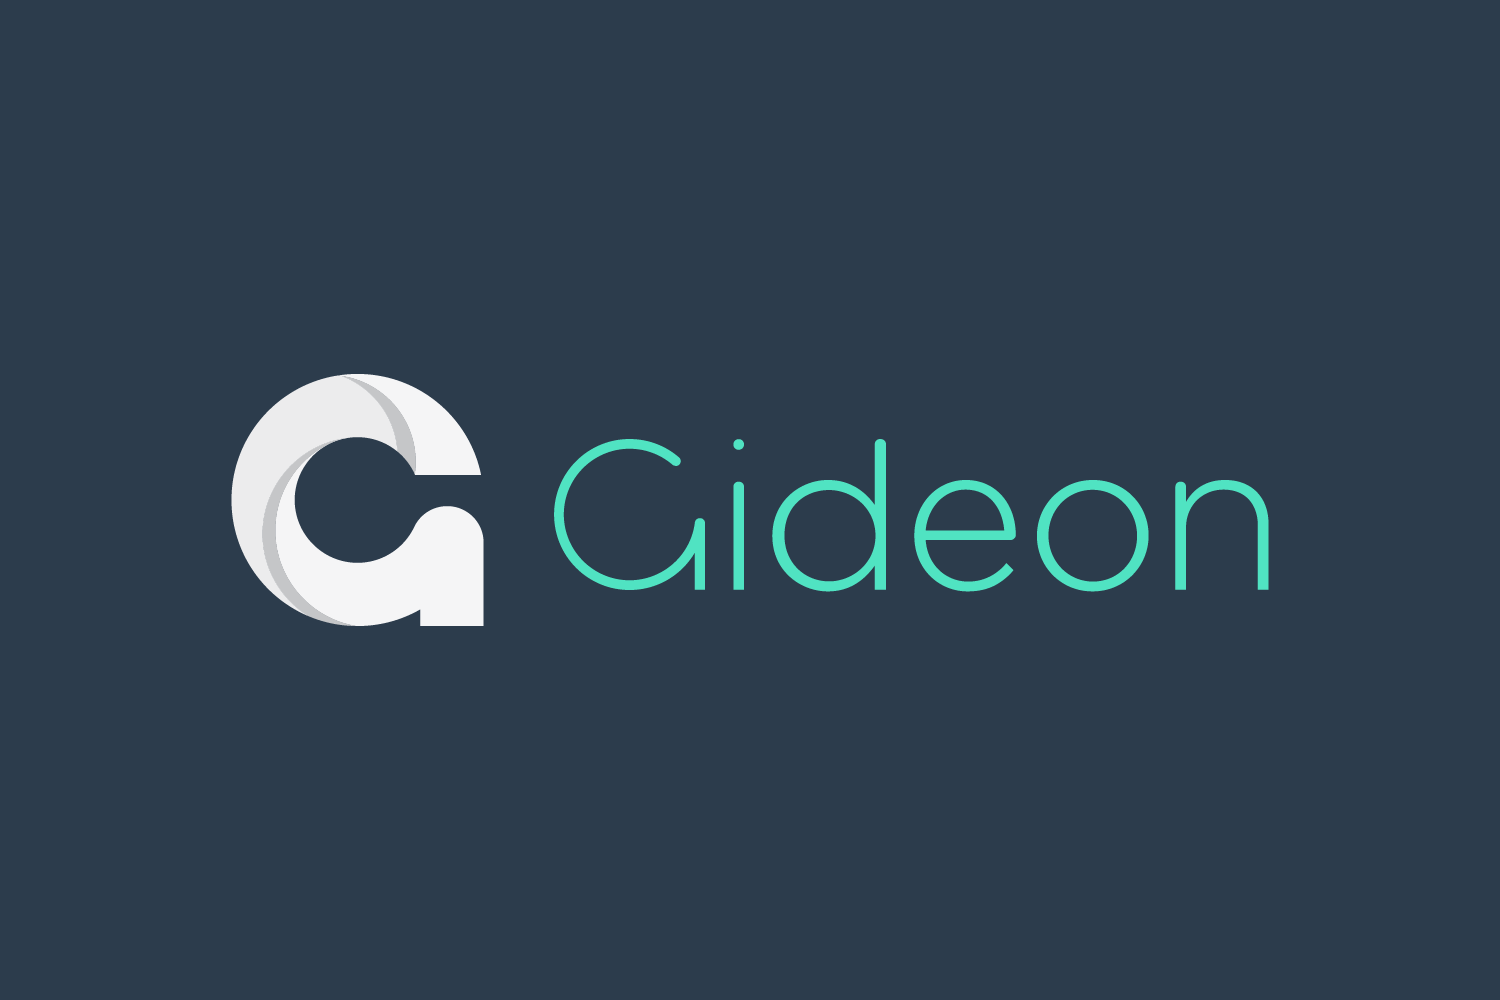 Gideon Logo - File:Logo gideon smart home.png - Wikimedia Commons